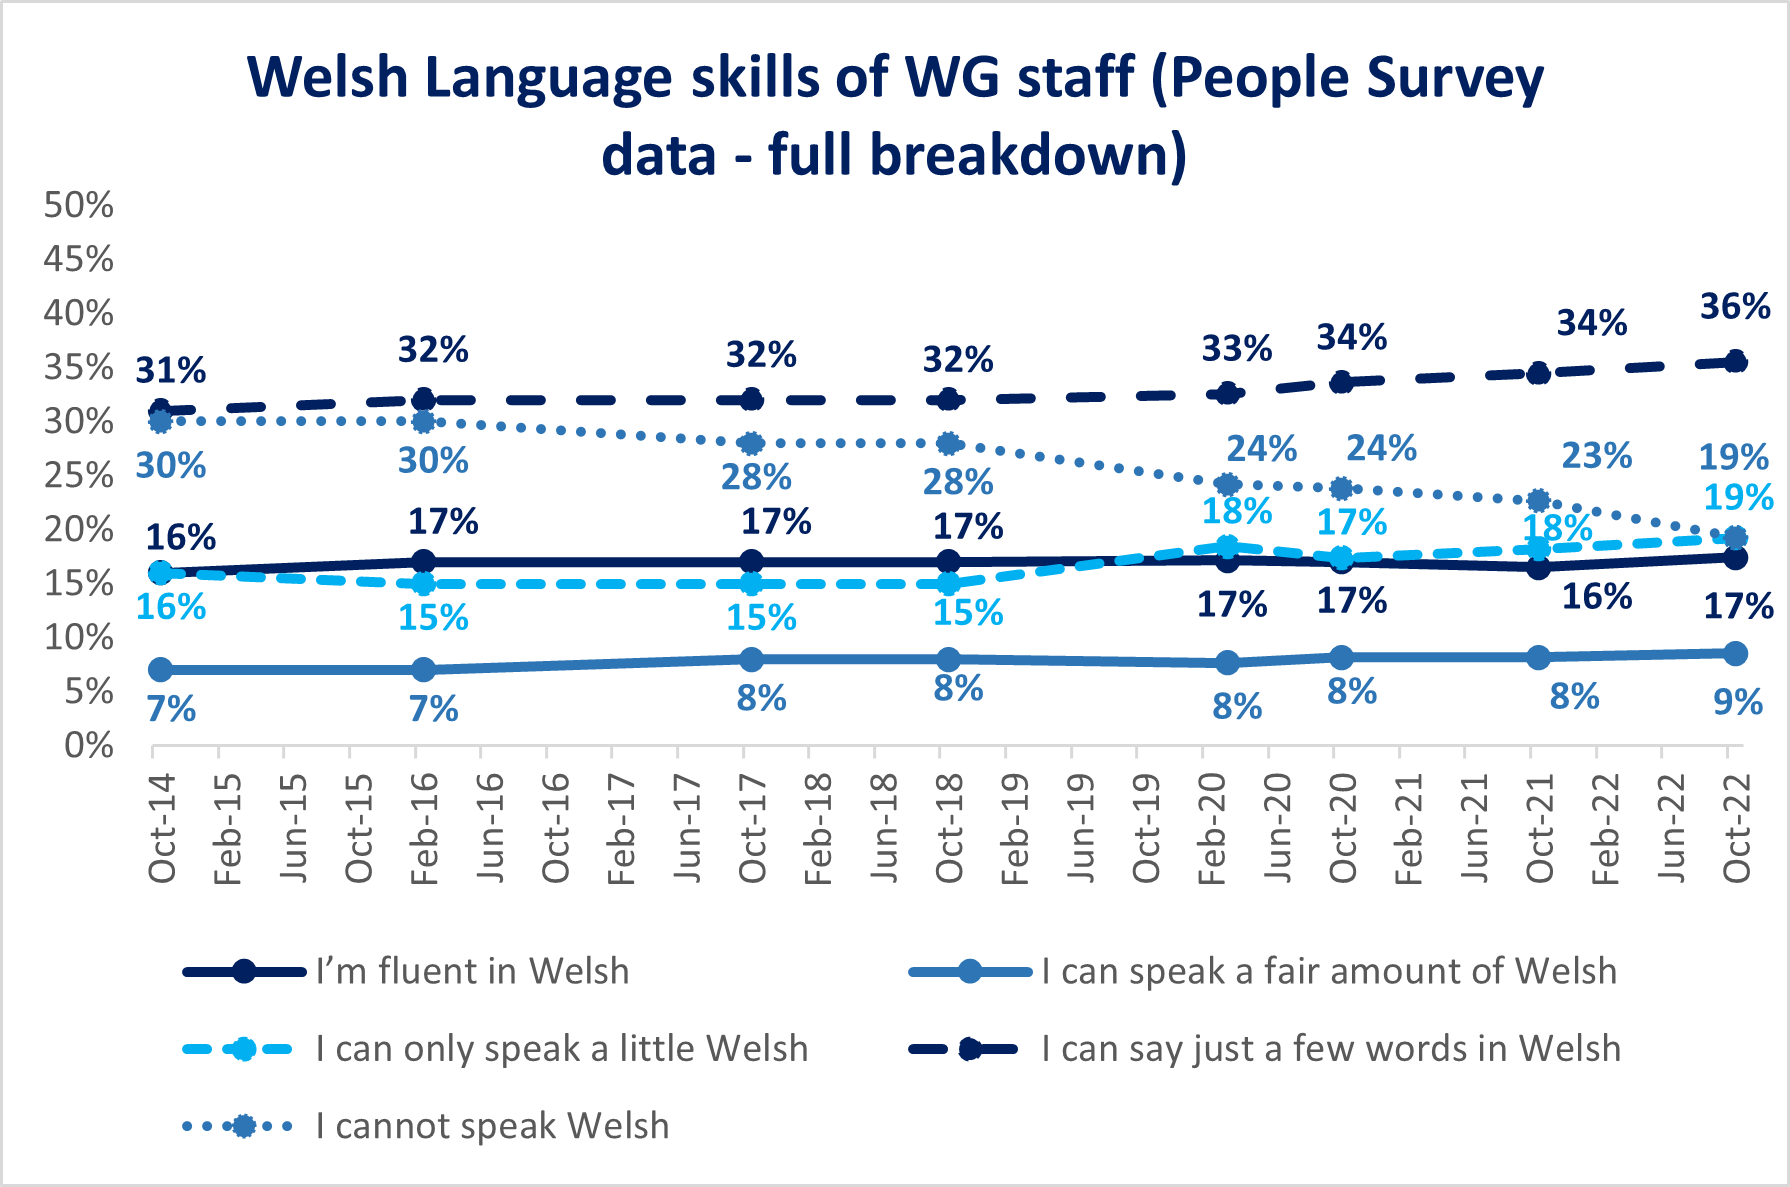 Welsh Language skills of WG staff (People Survey data - full breakdown)